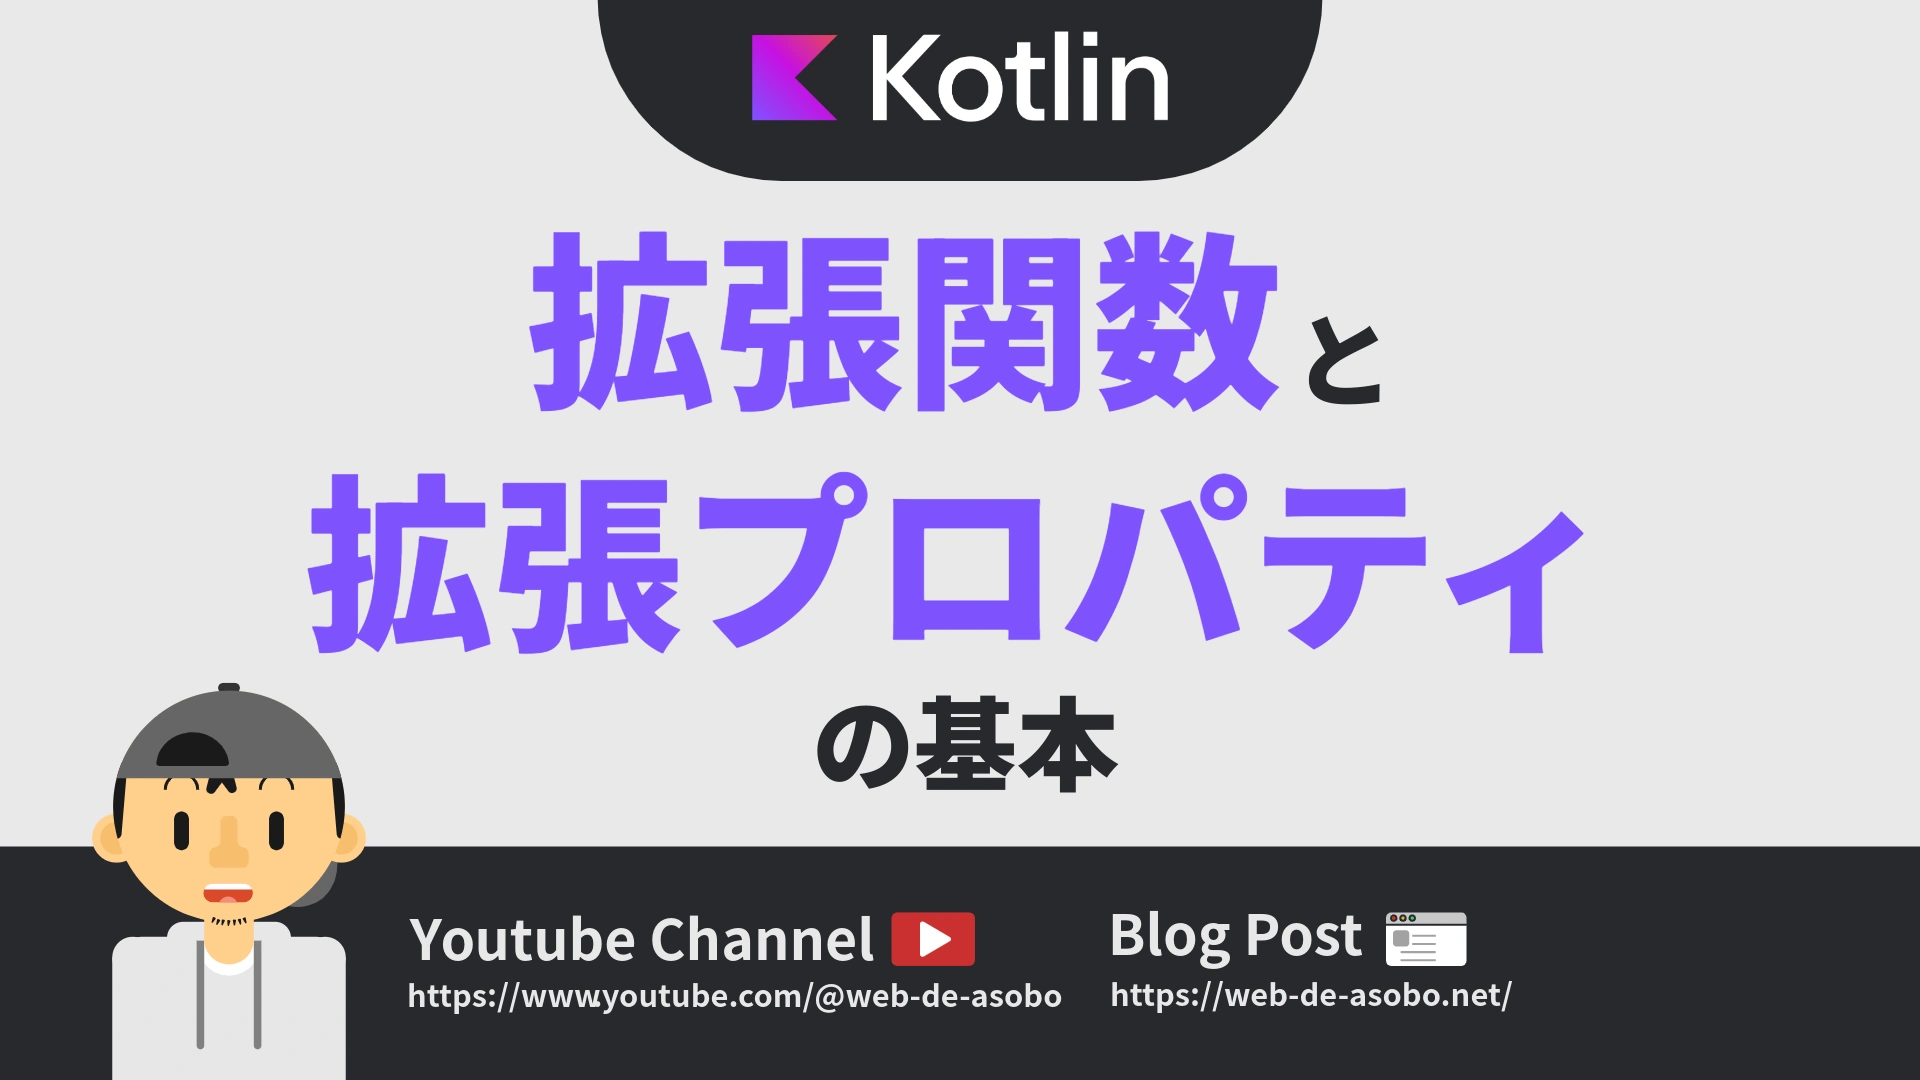 Kotlinにおける拡張関数・拡張プロパティについての解説動画リンク